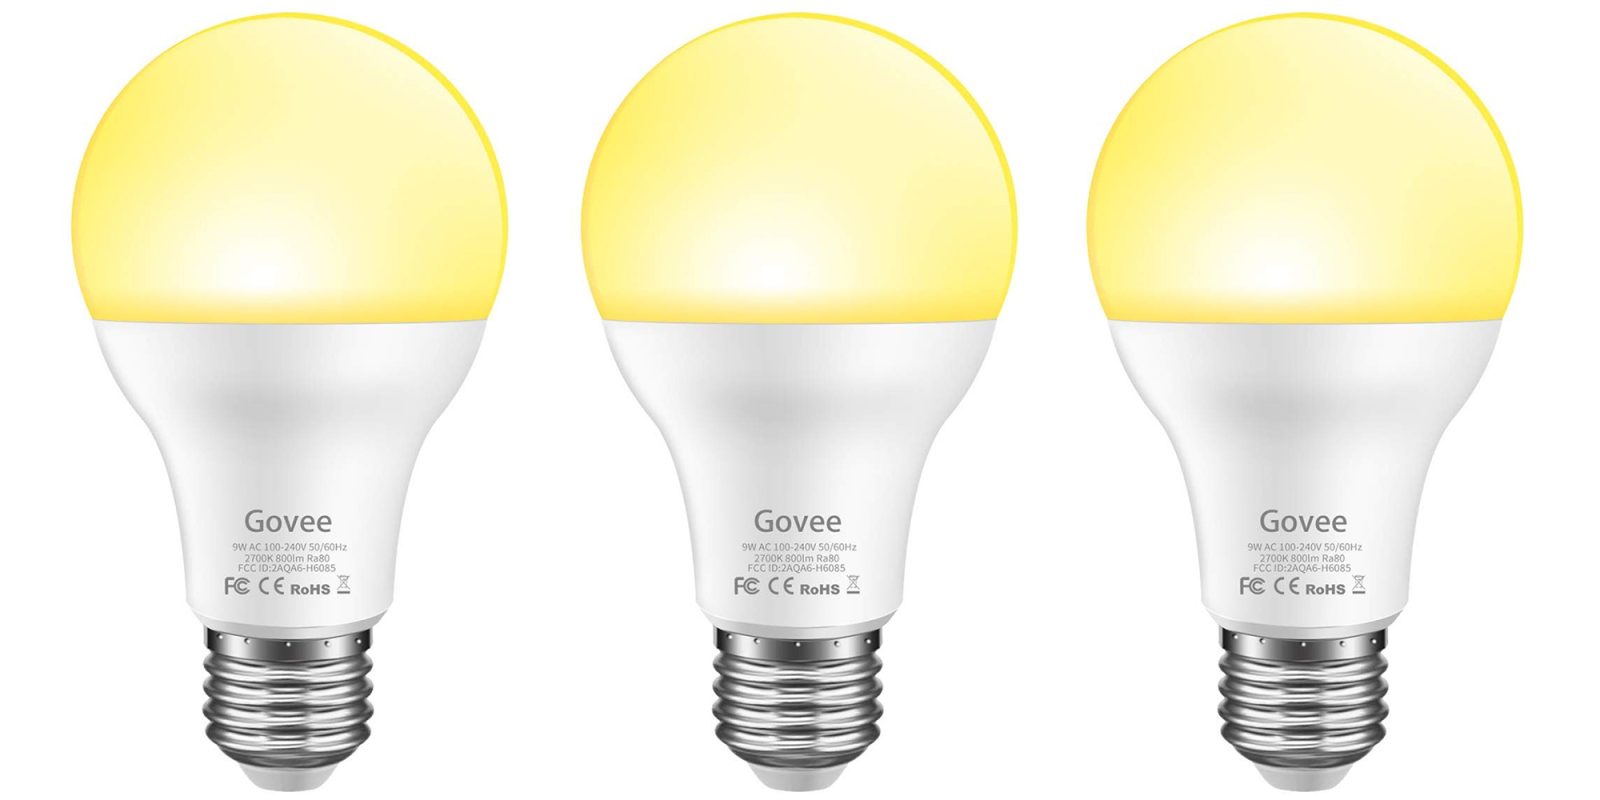 govee smart led light bulb